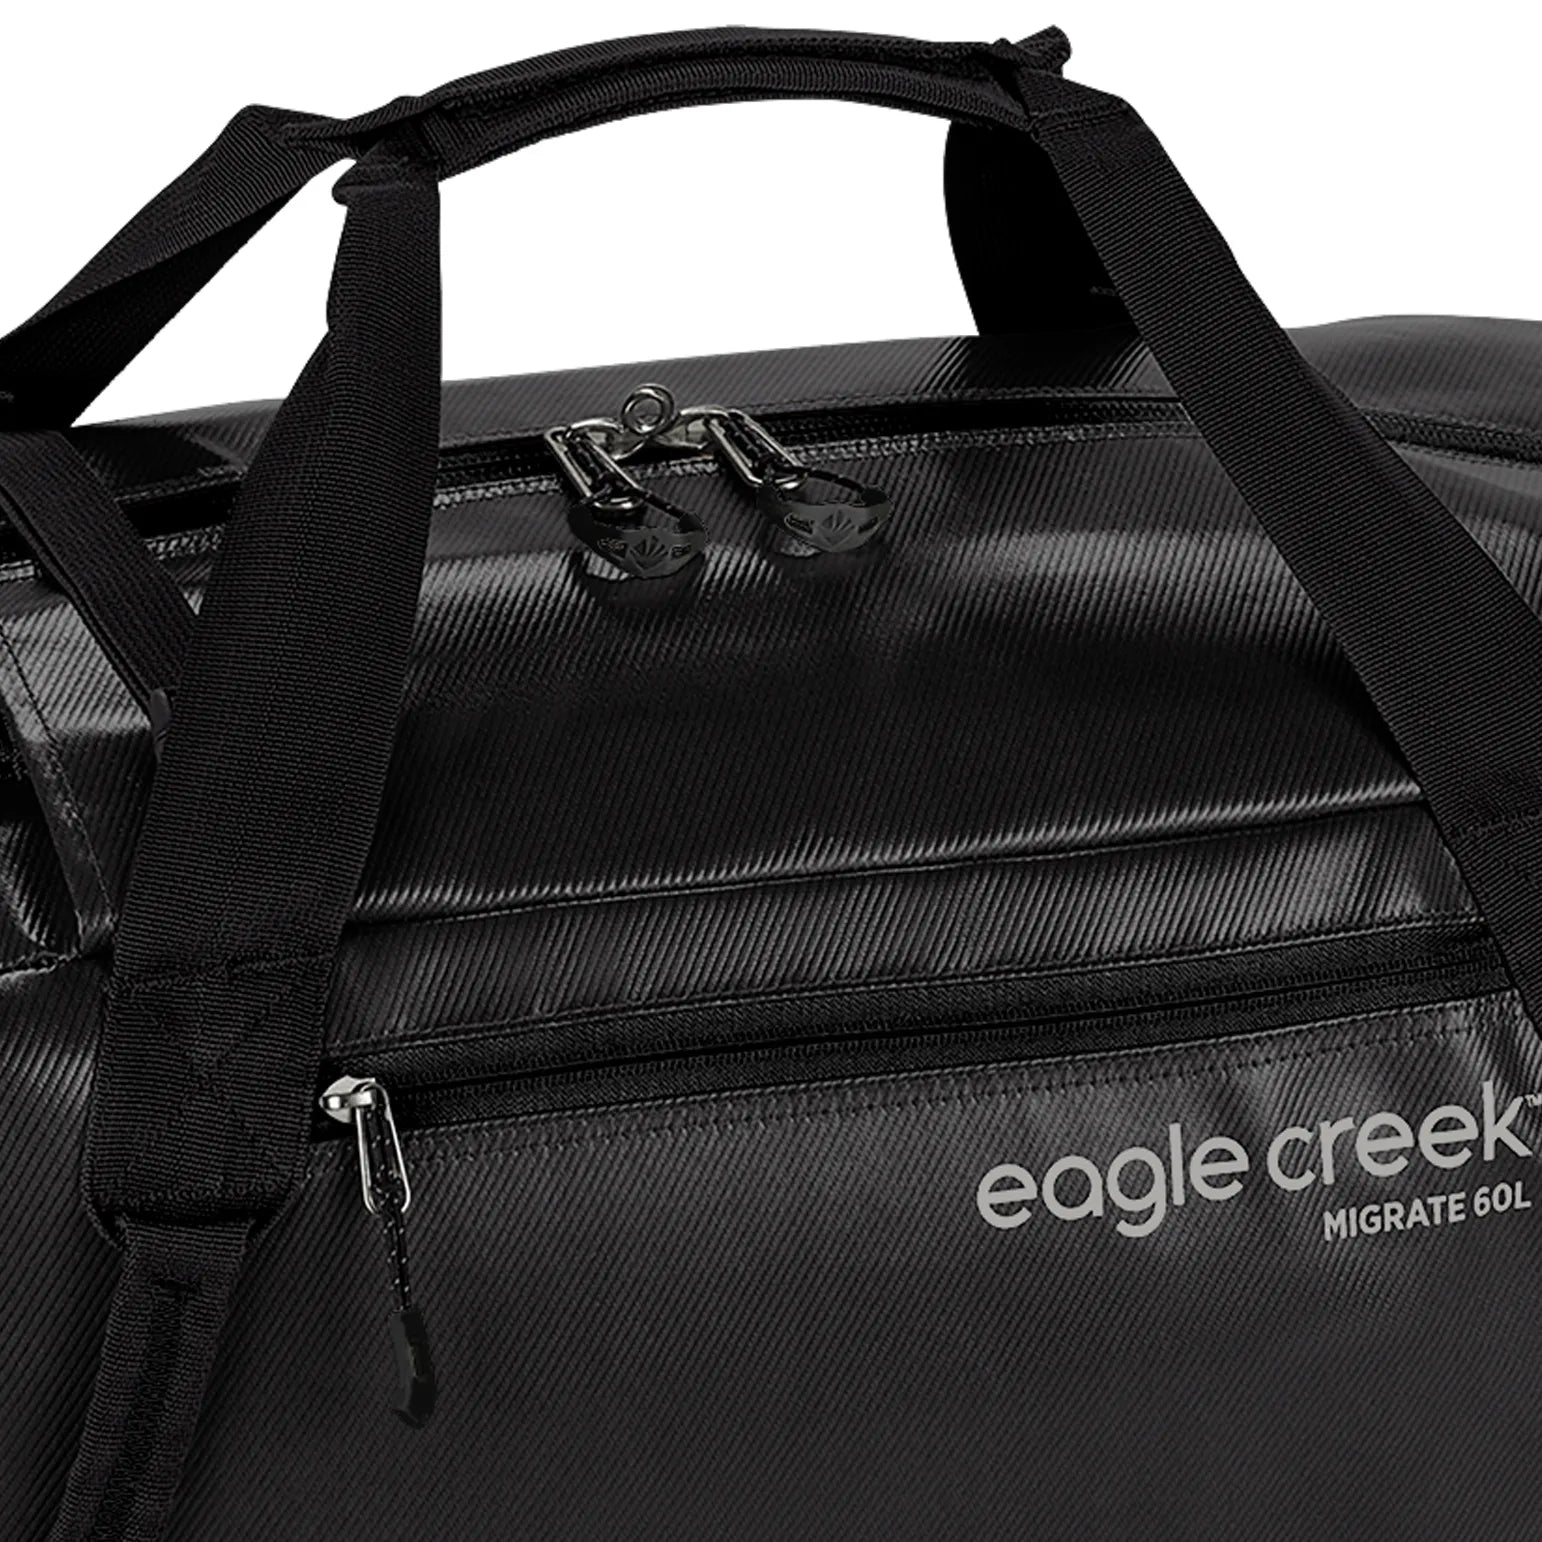 Eagle Creek Migrate sac de voyage 59 cm - bleu mesa